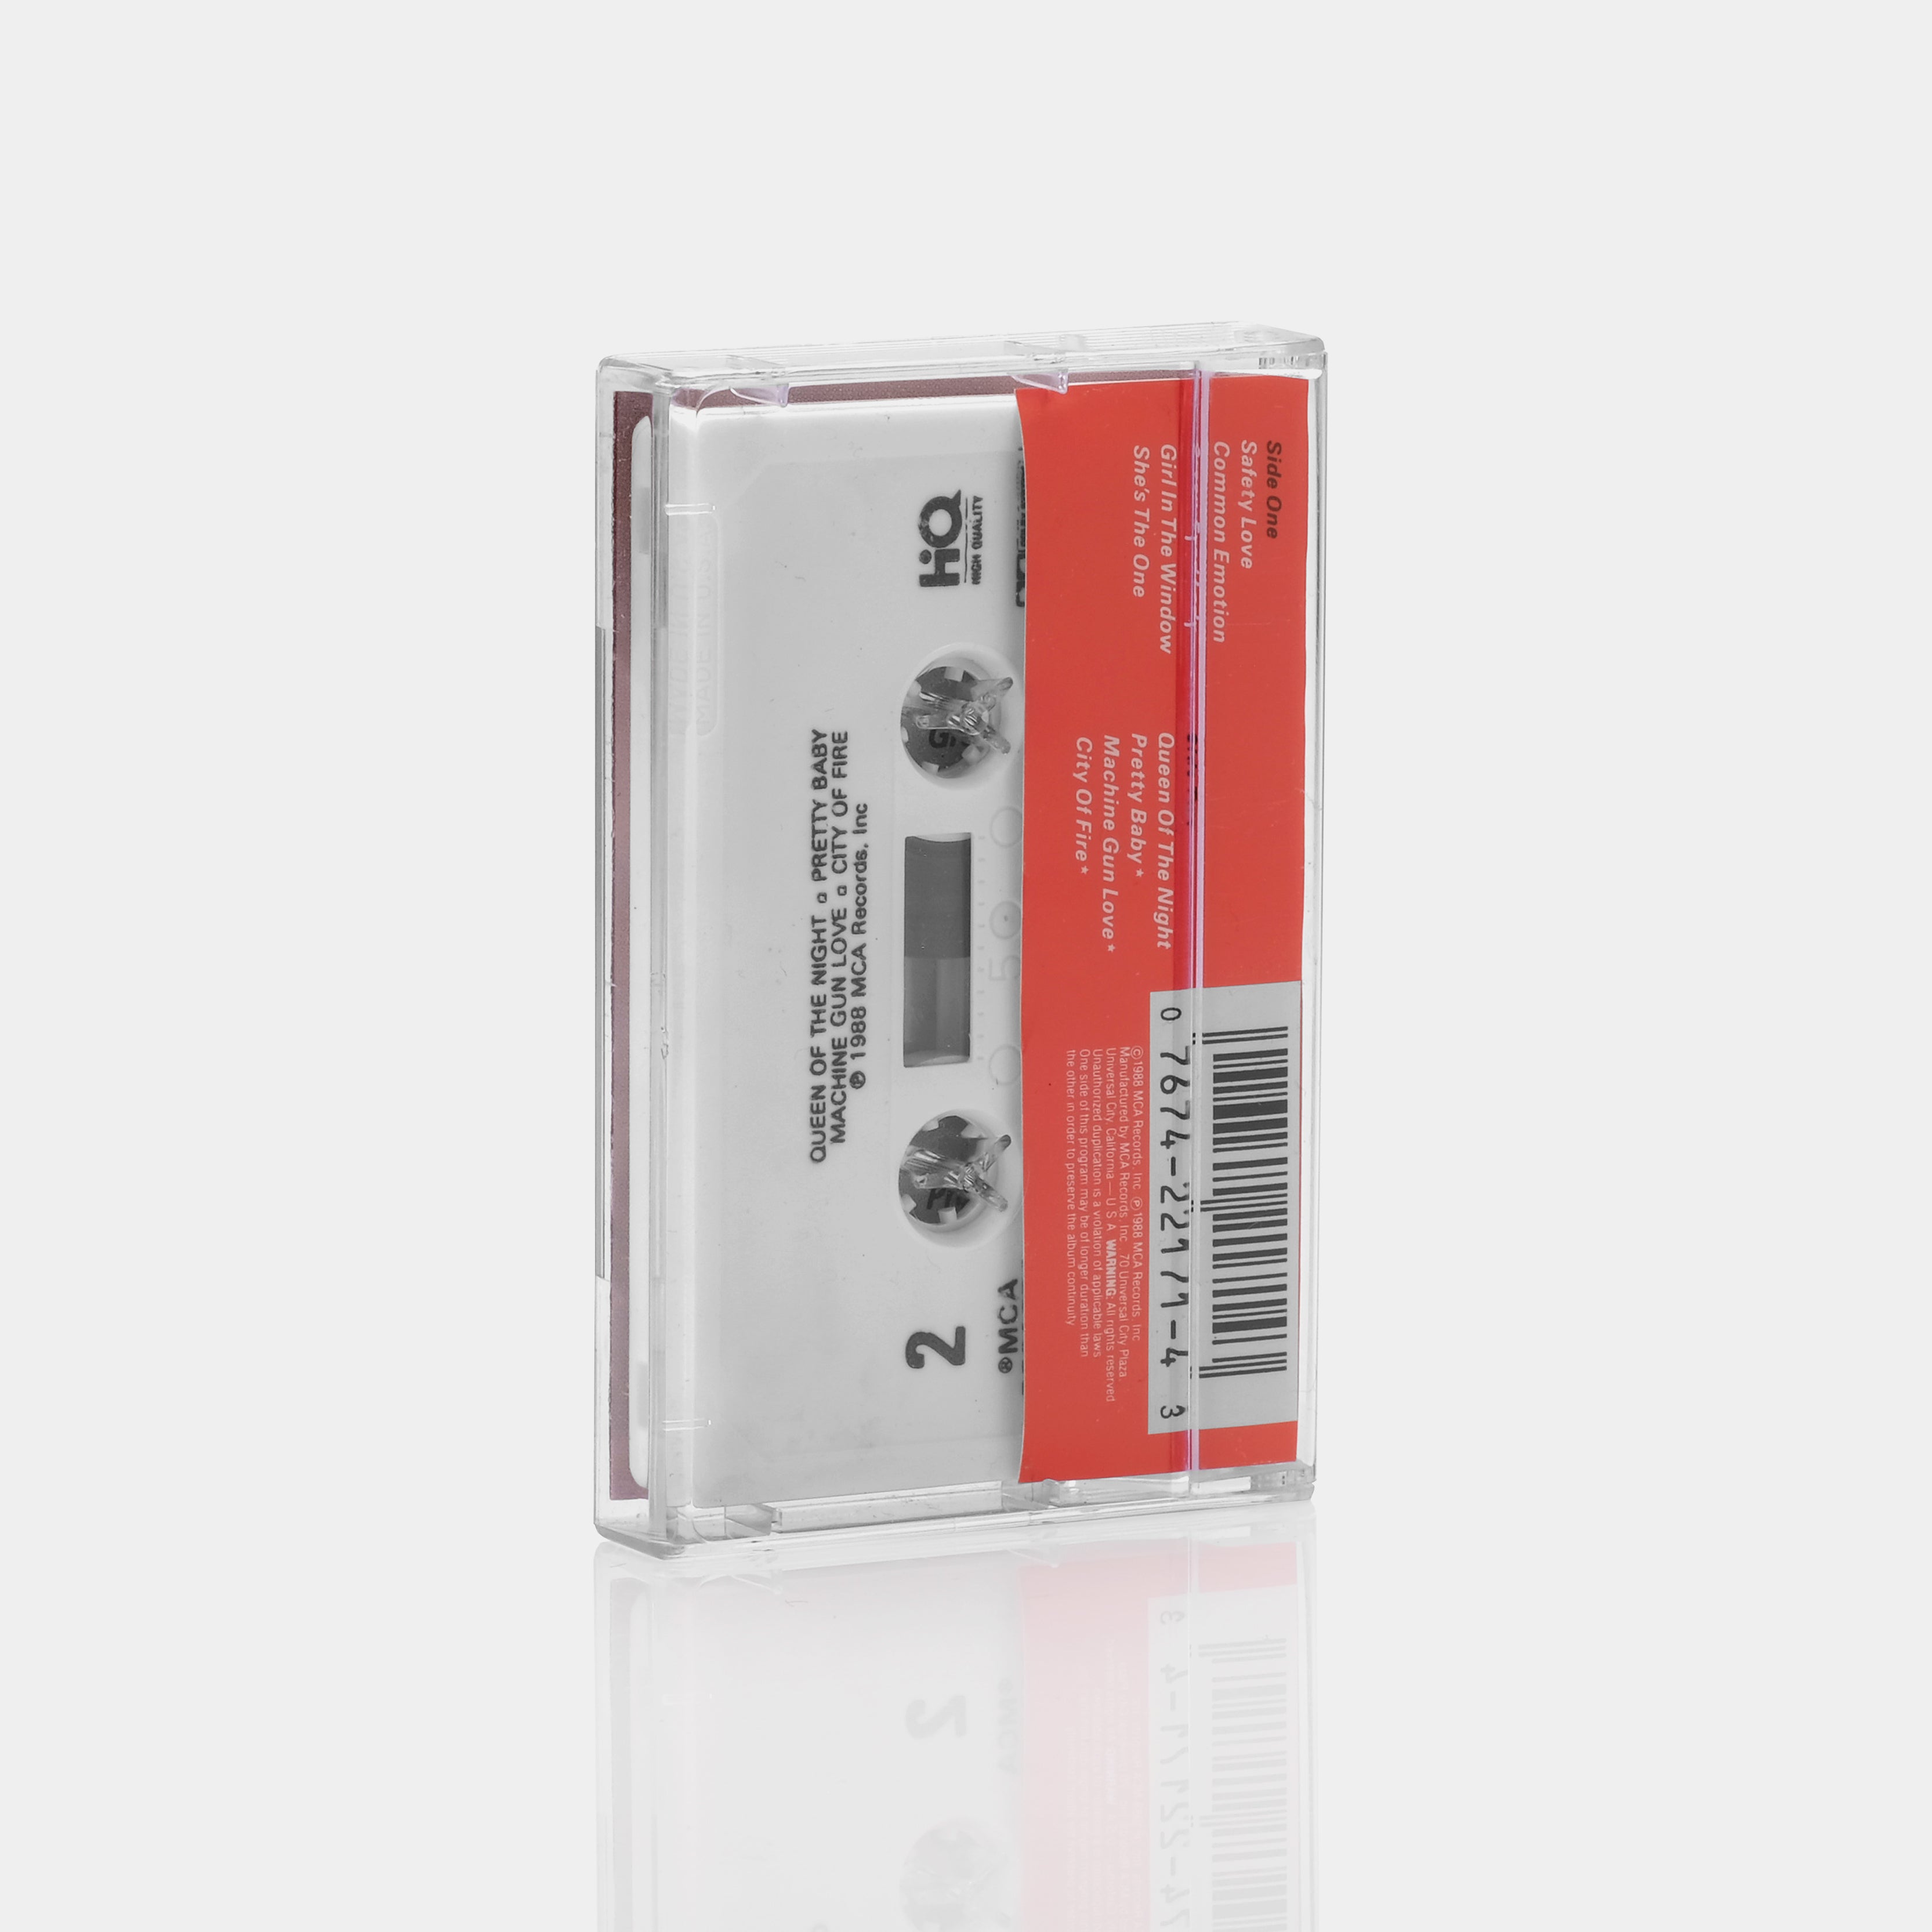 David Drew - Safety Love Cassette Tape